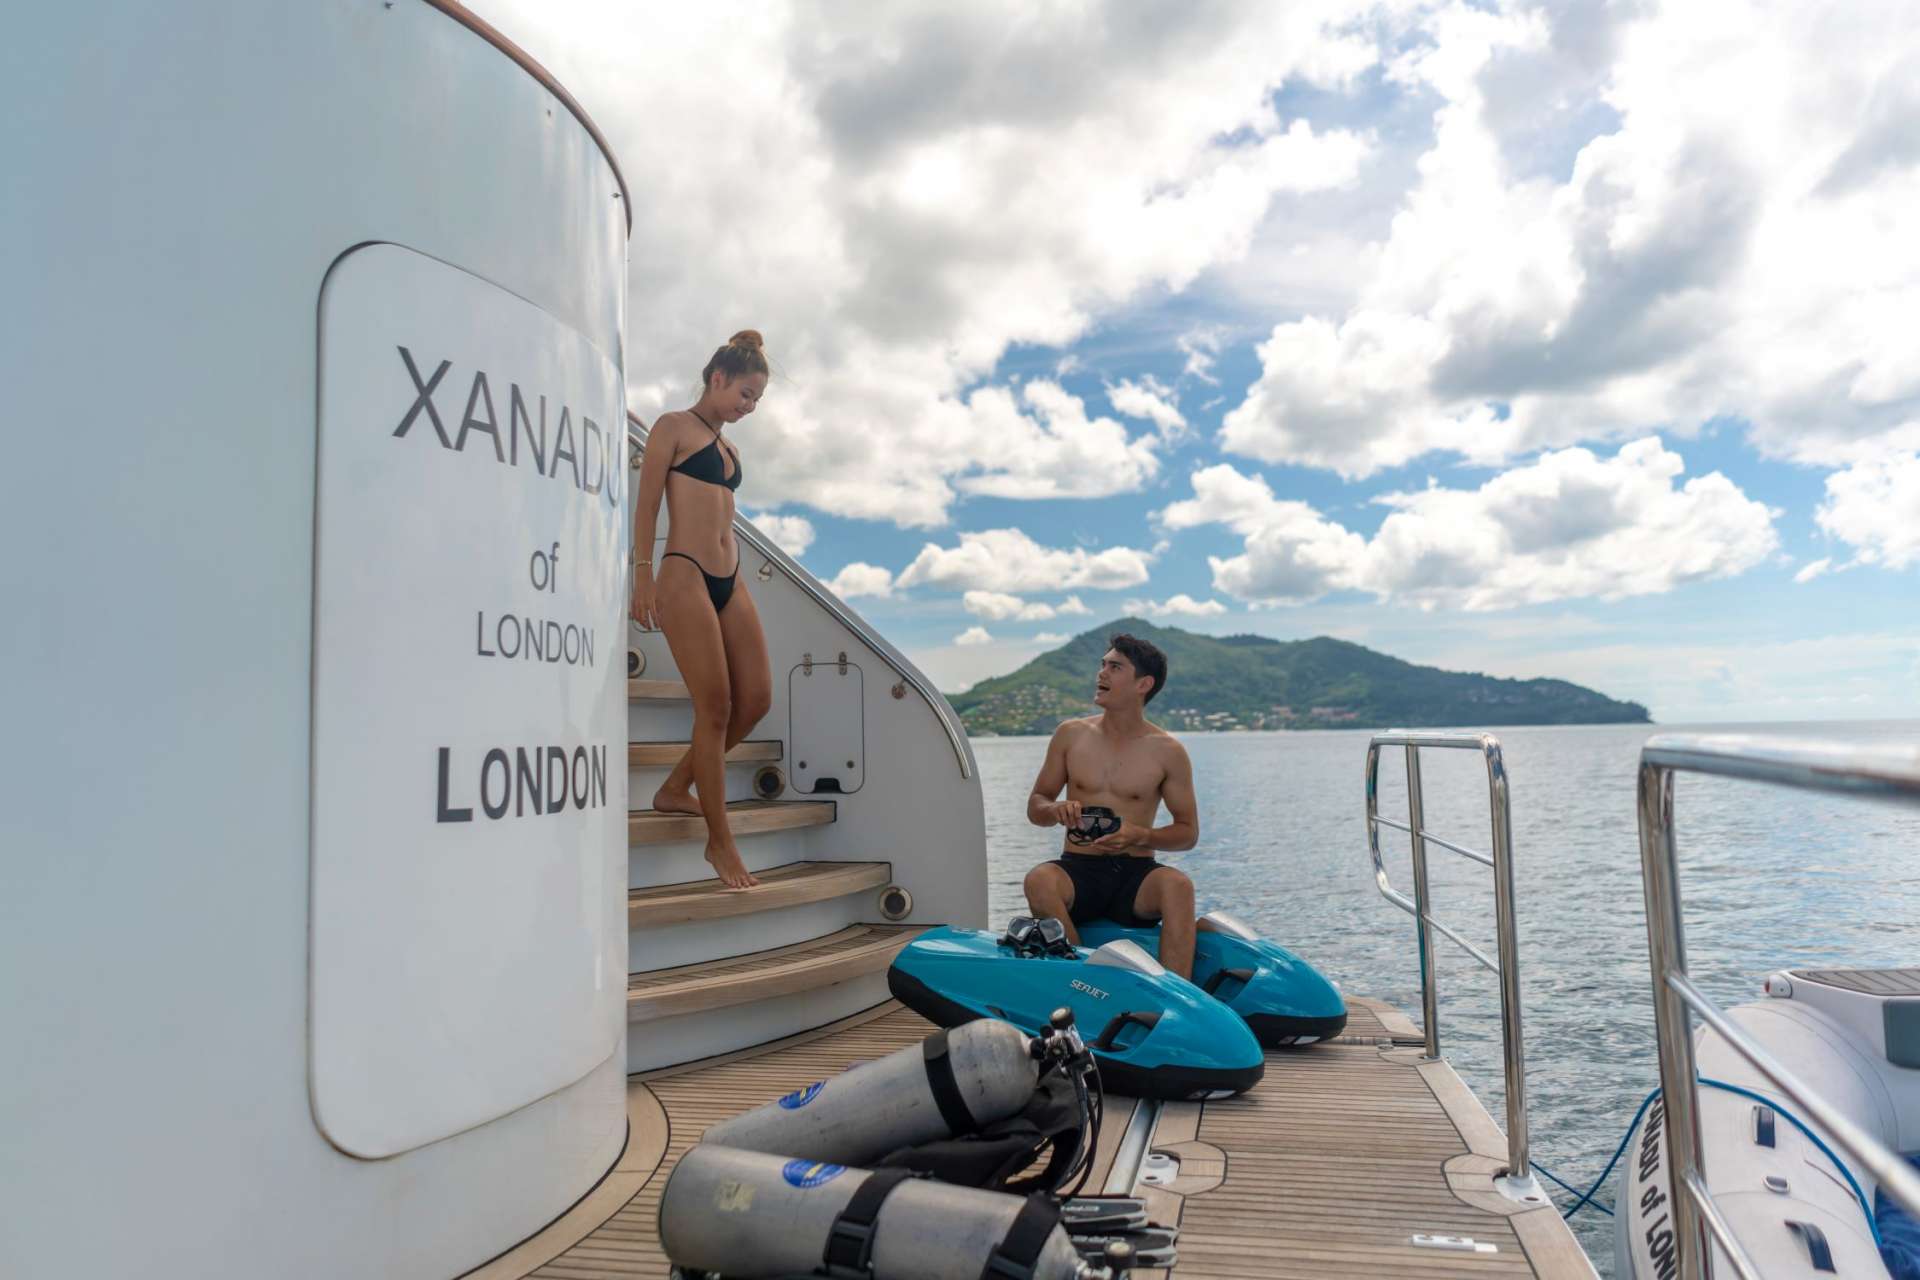 xanadu of london - Yacht Charter Malaysia & Boat hire in SE Asia 5